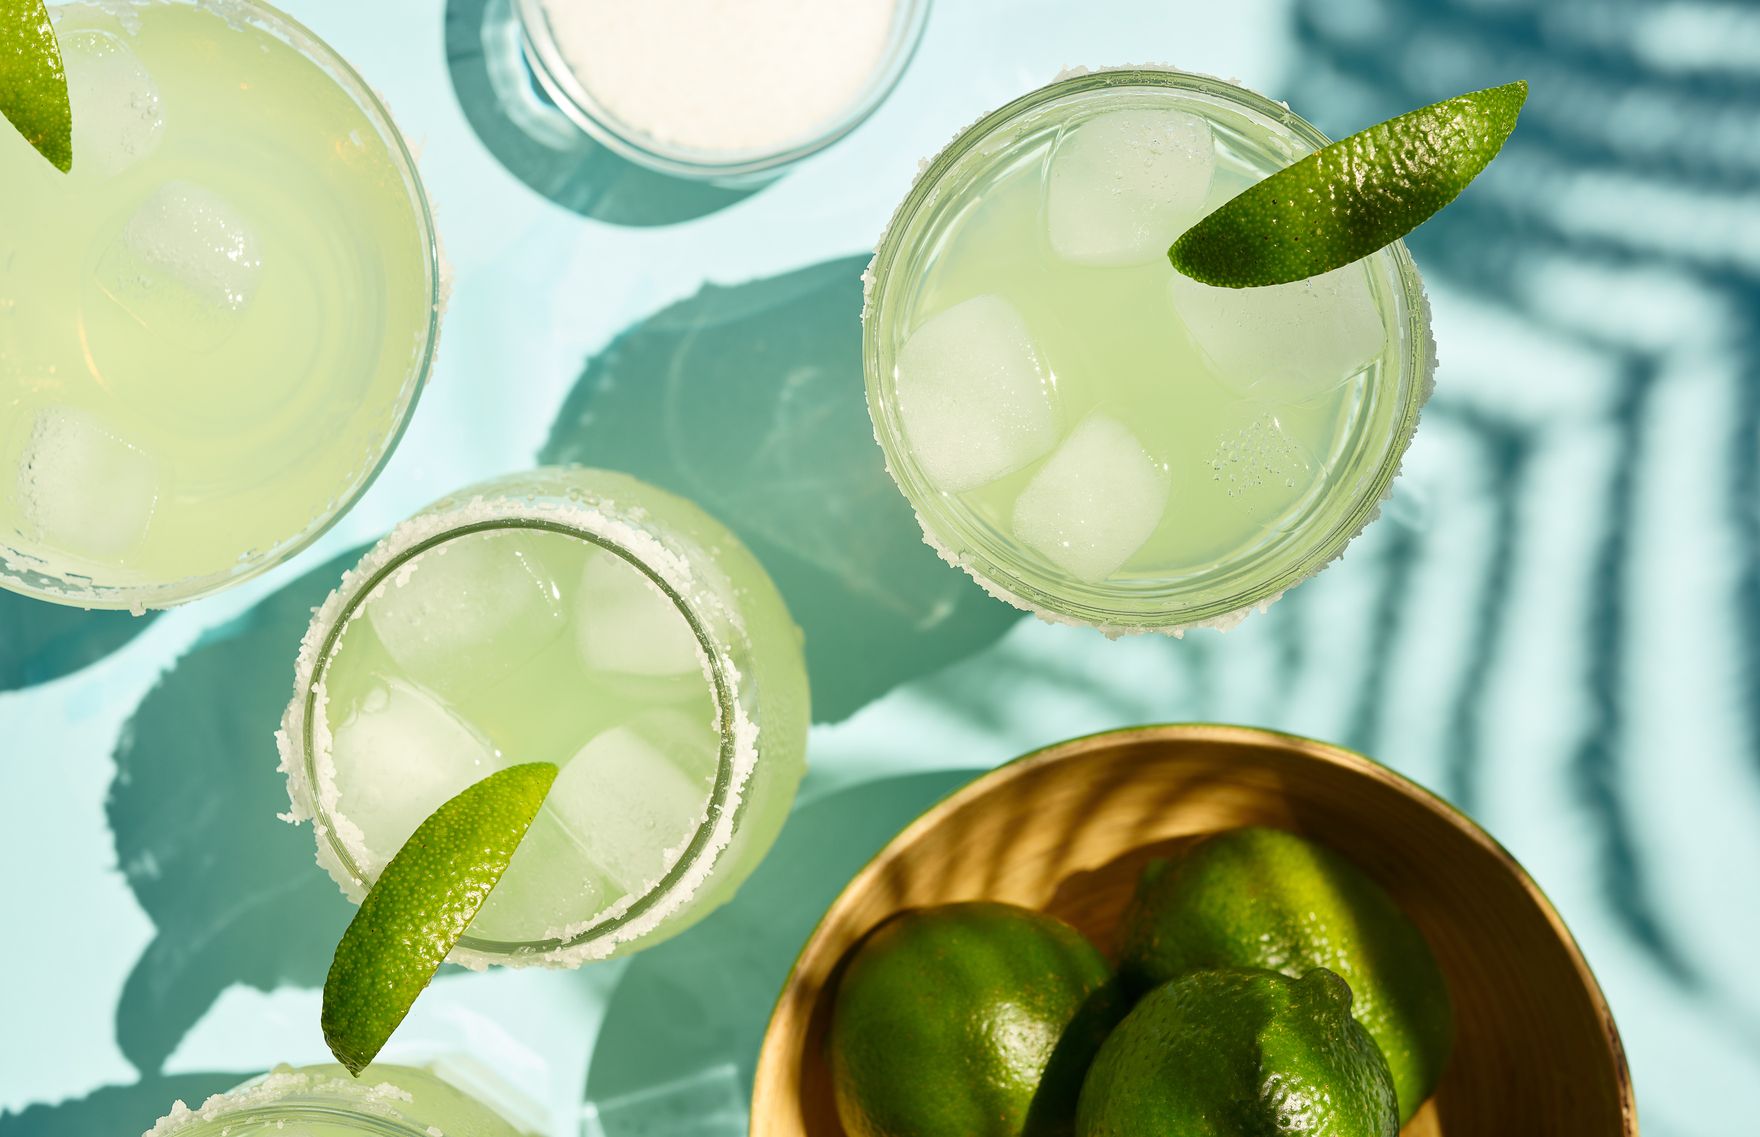 Best Margarita Recipes - How to Make Easy and Creative DIY Margaritas for  National Margarita Day